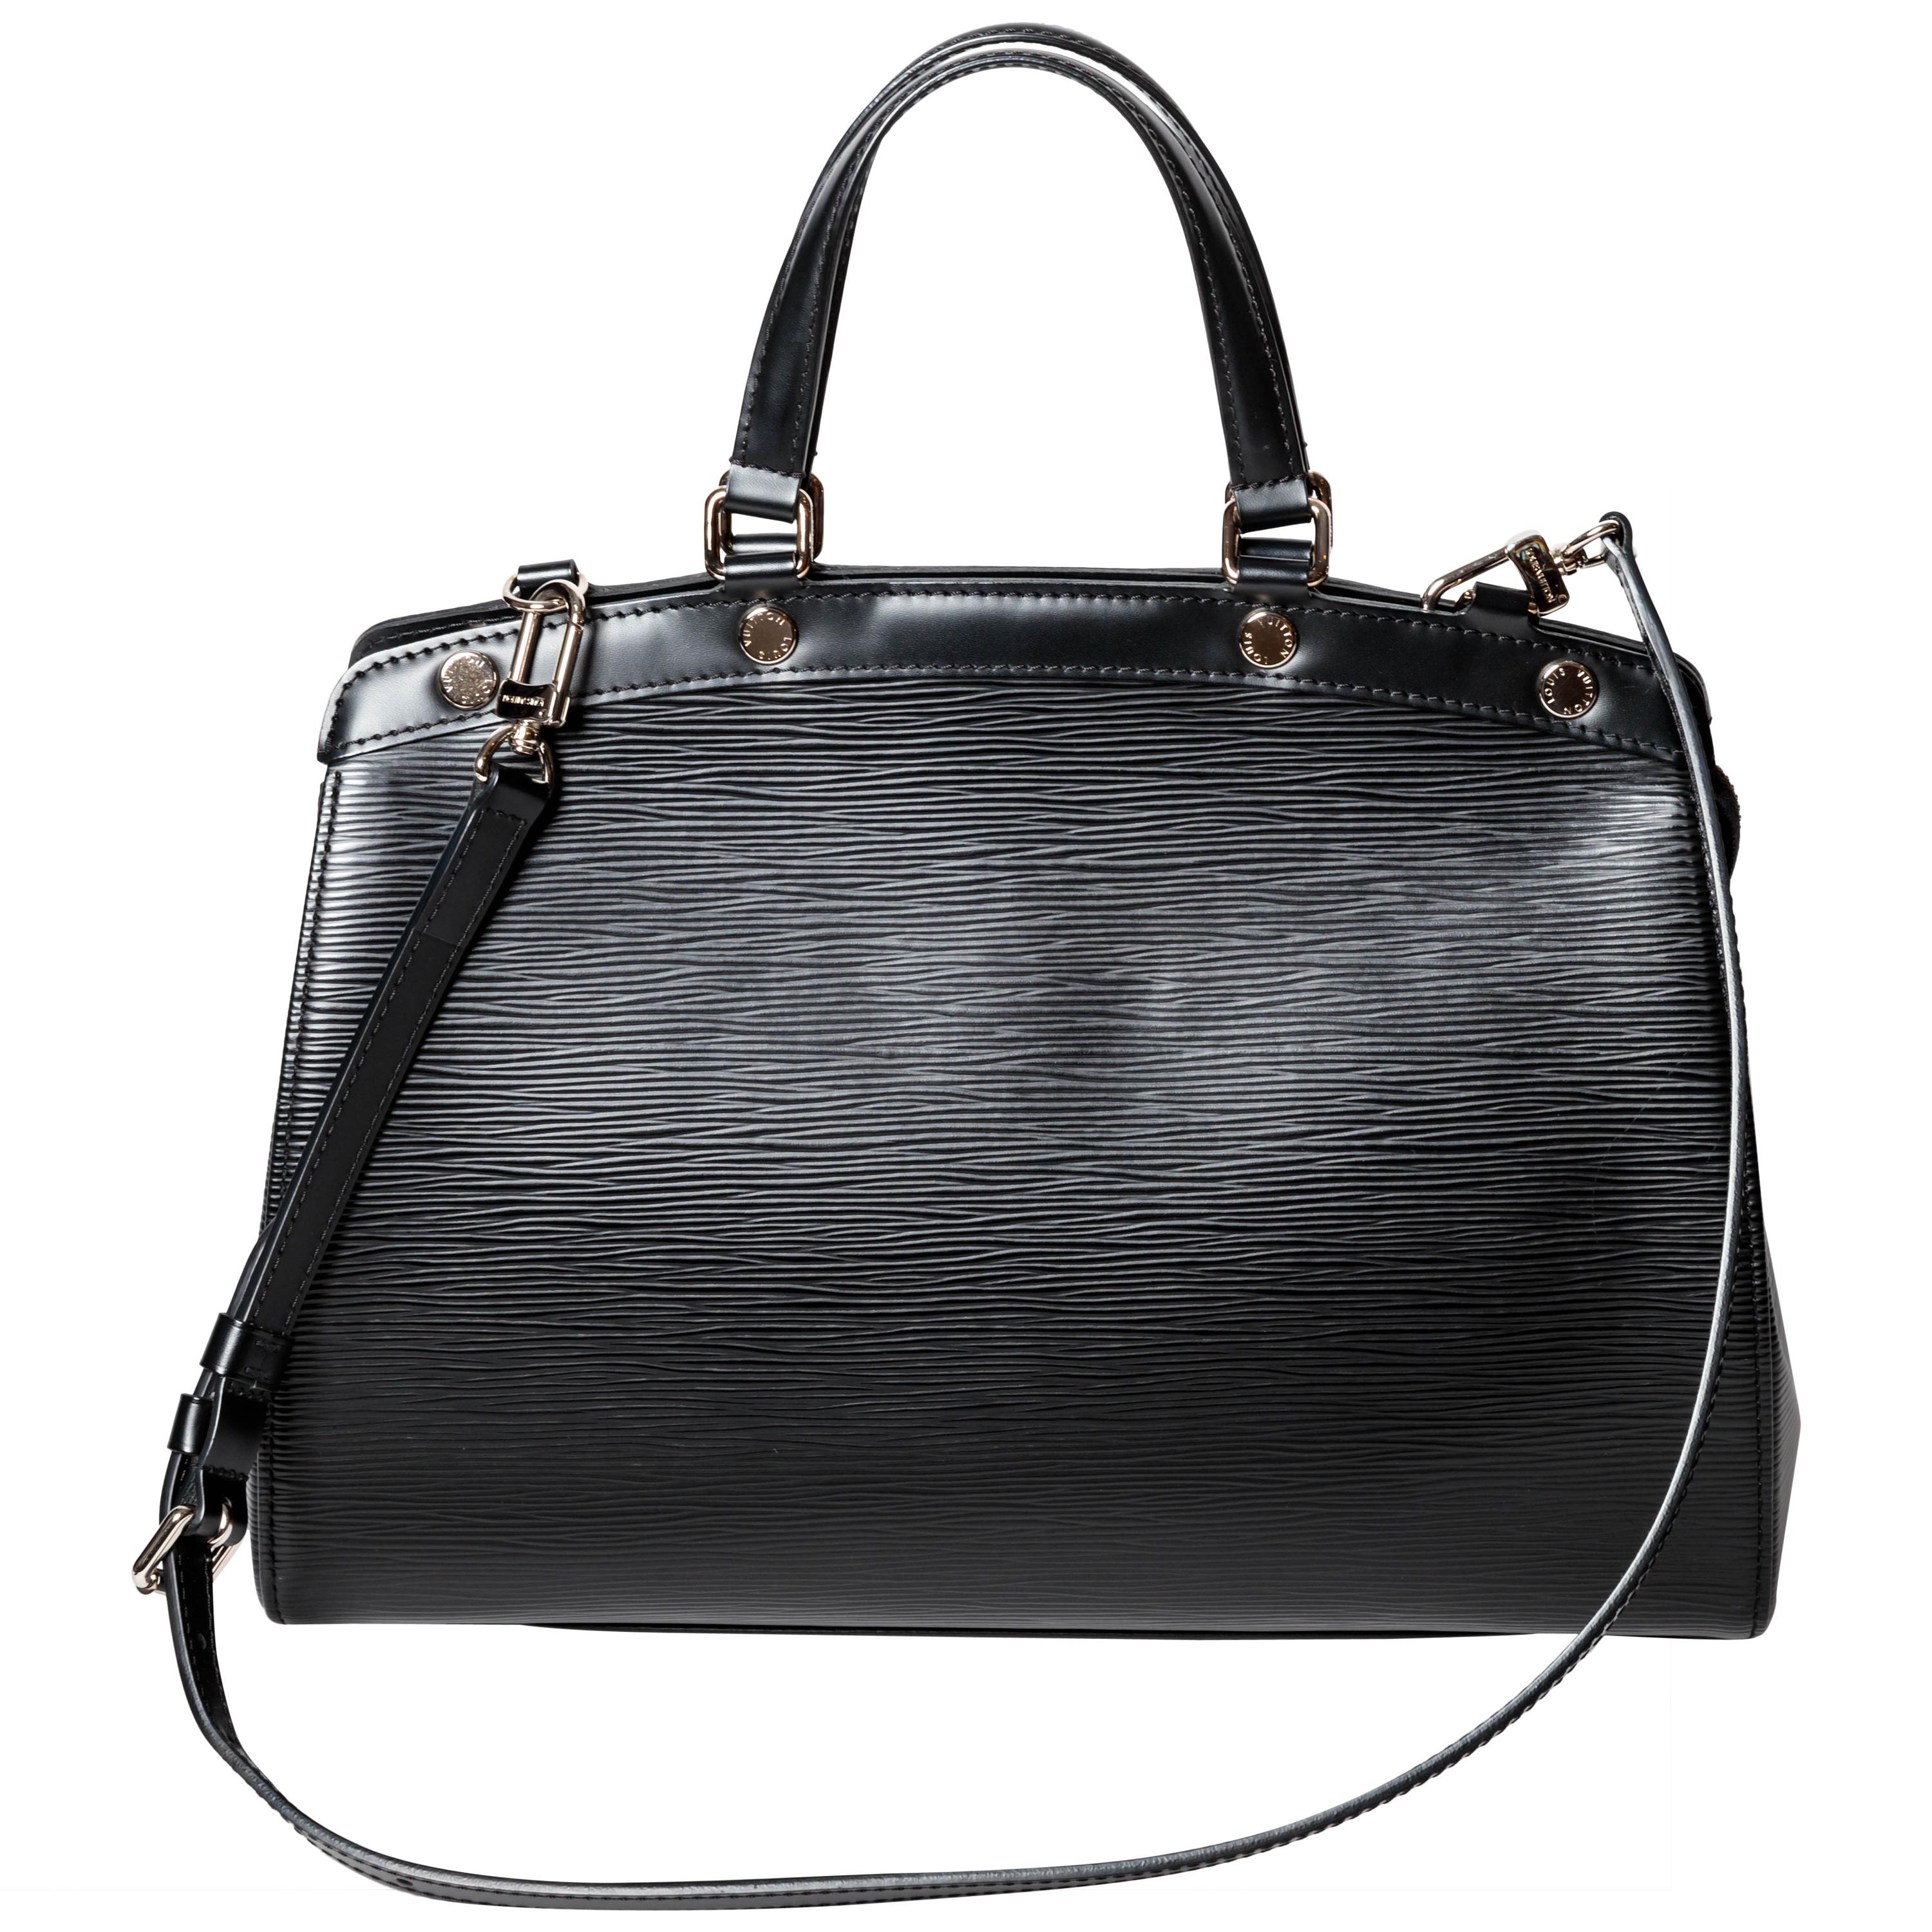 Louis Vuitton Black Epi Bag with Top Handle and Shoulder Strap For Sale